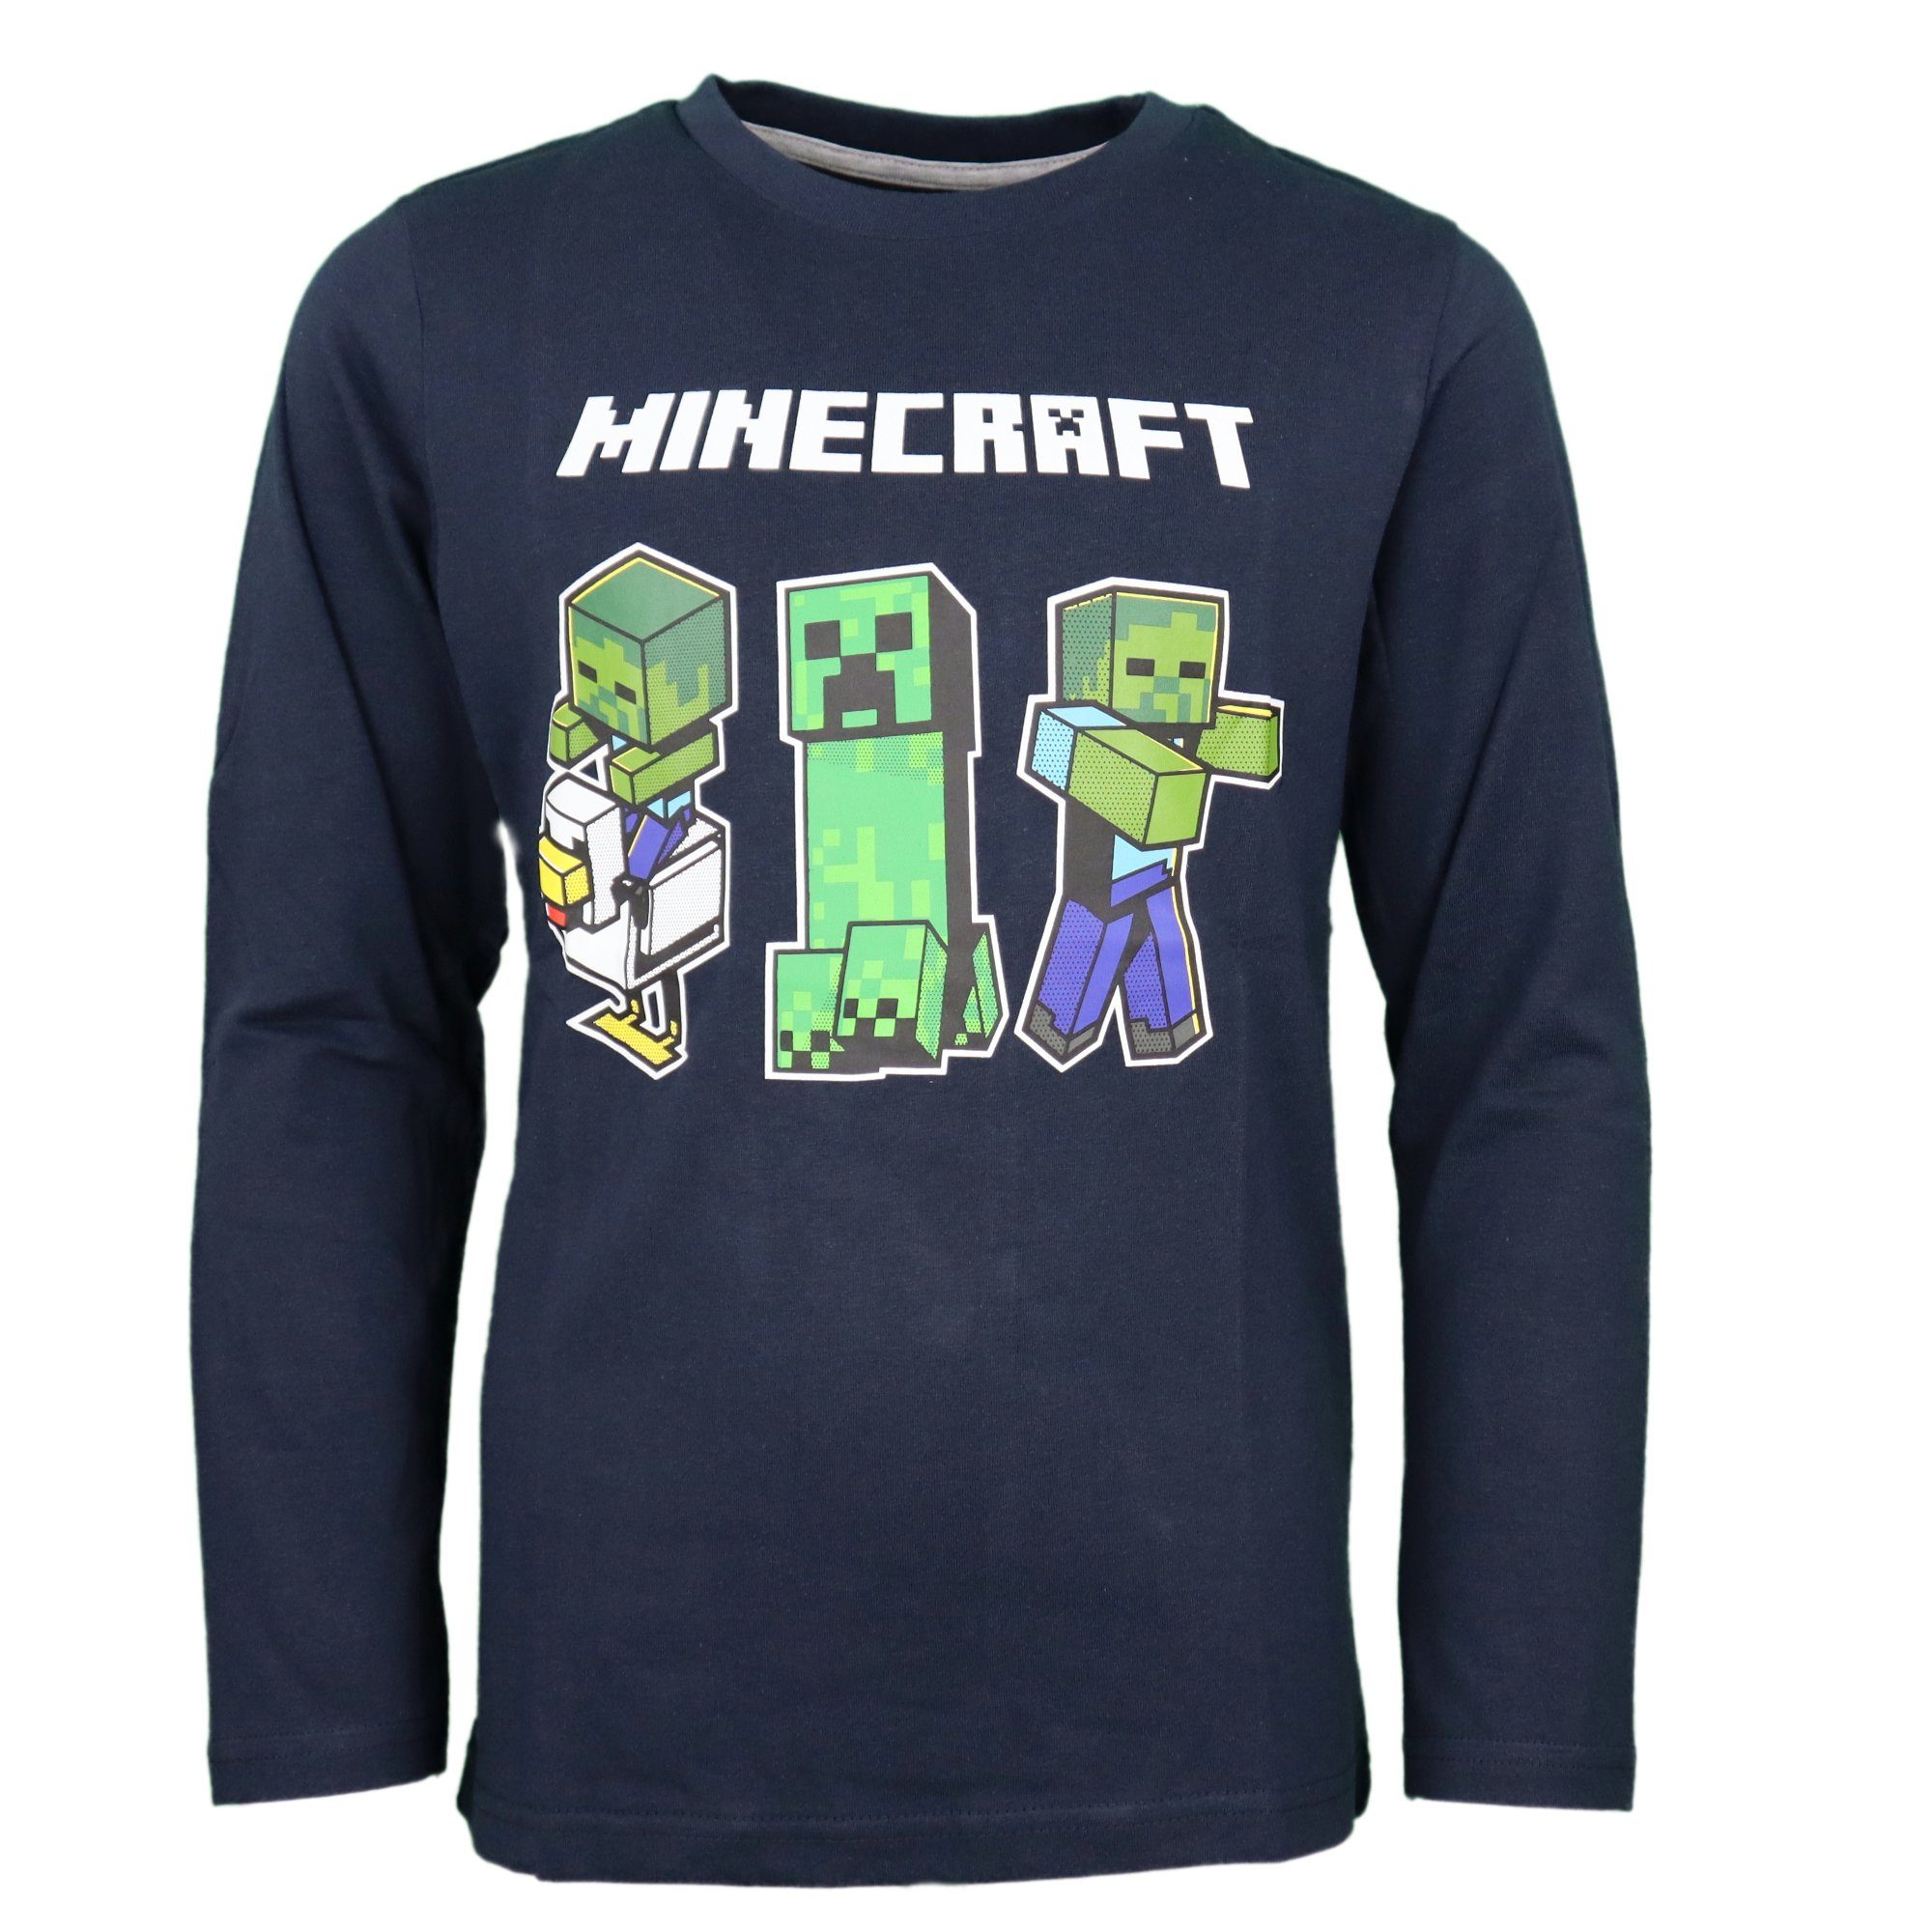 Minecraft Langarmshirt Creeper Kinder Shirt Gr. 116 bis 152, 100% Baumwolle